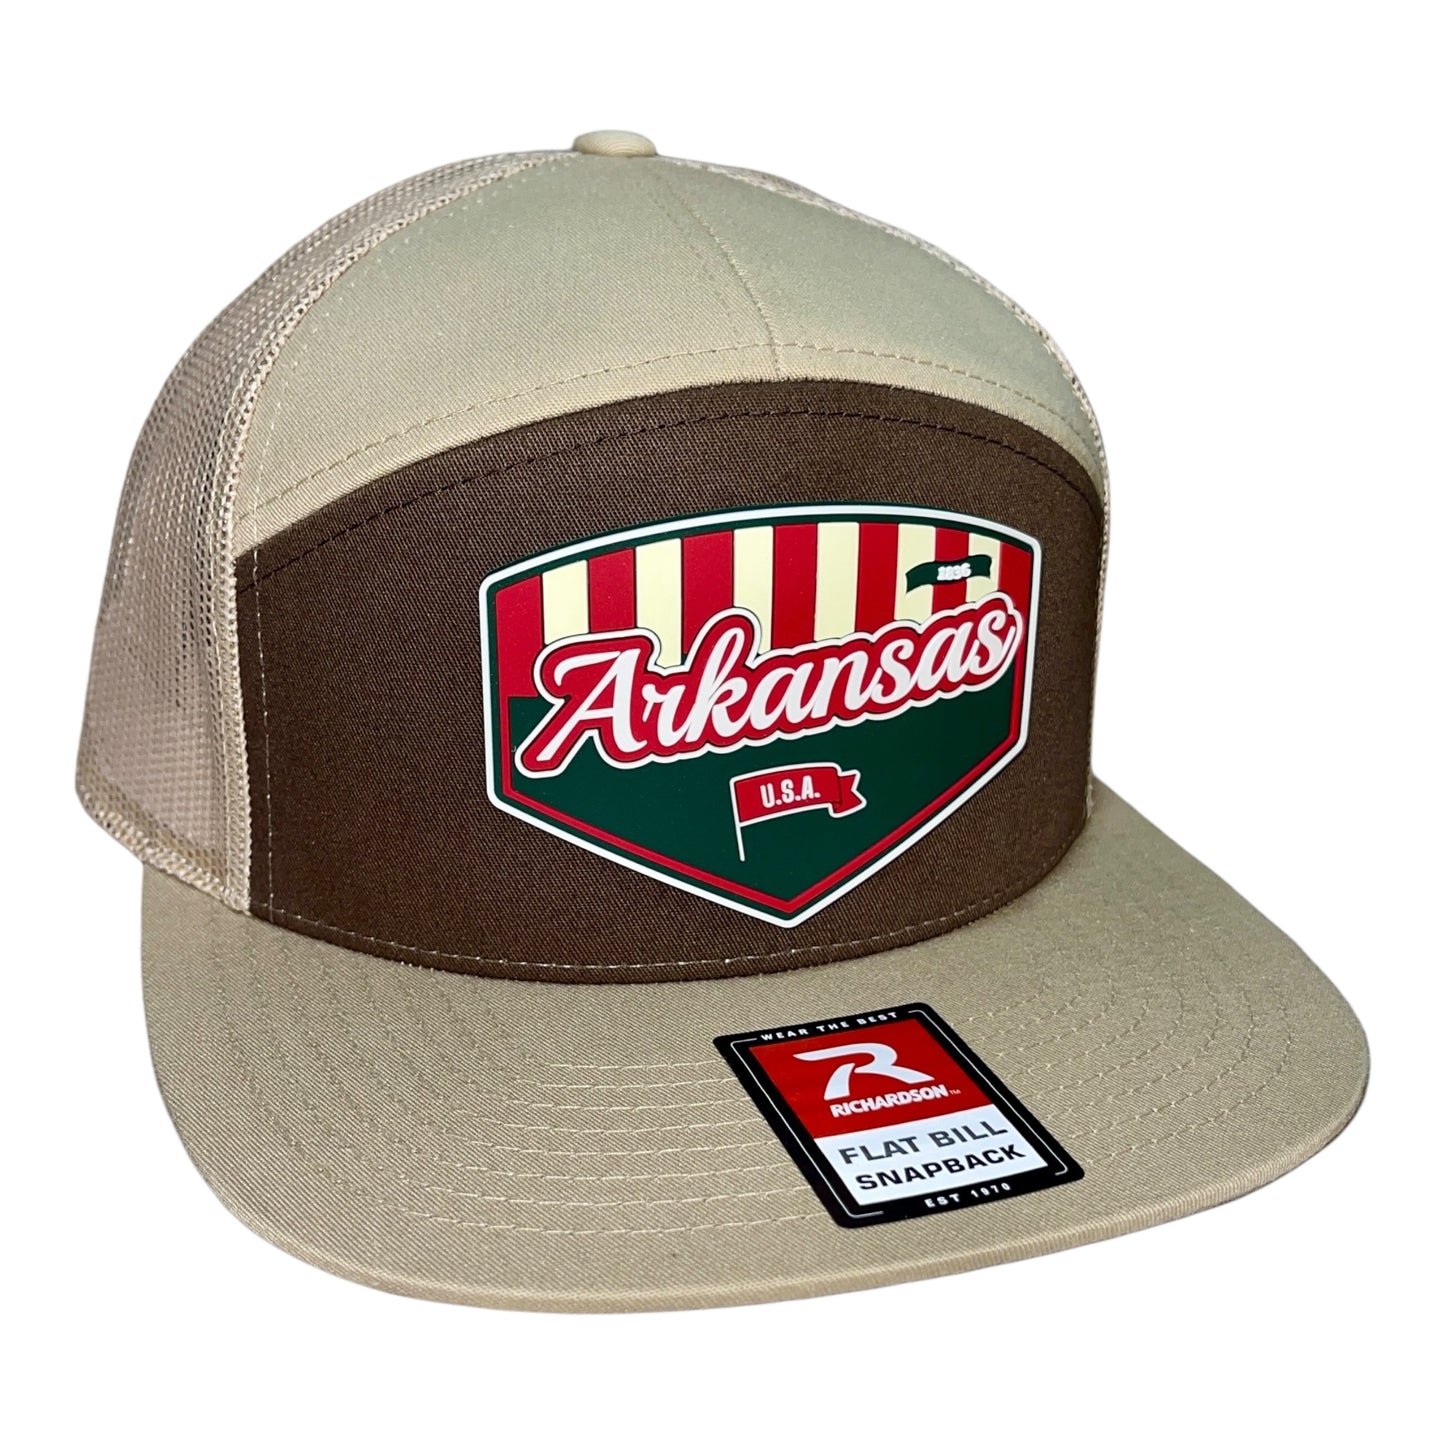 Arkansas Razorbacks Baseball Heritage Series 3D Snapback Seven-Panel Flat Bill Trucker Hat- Brown/ Tan